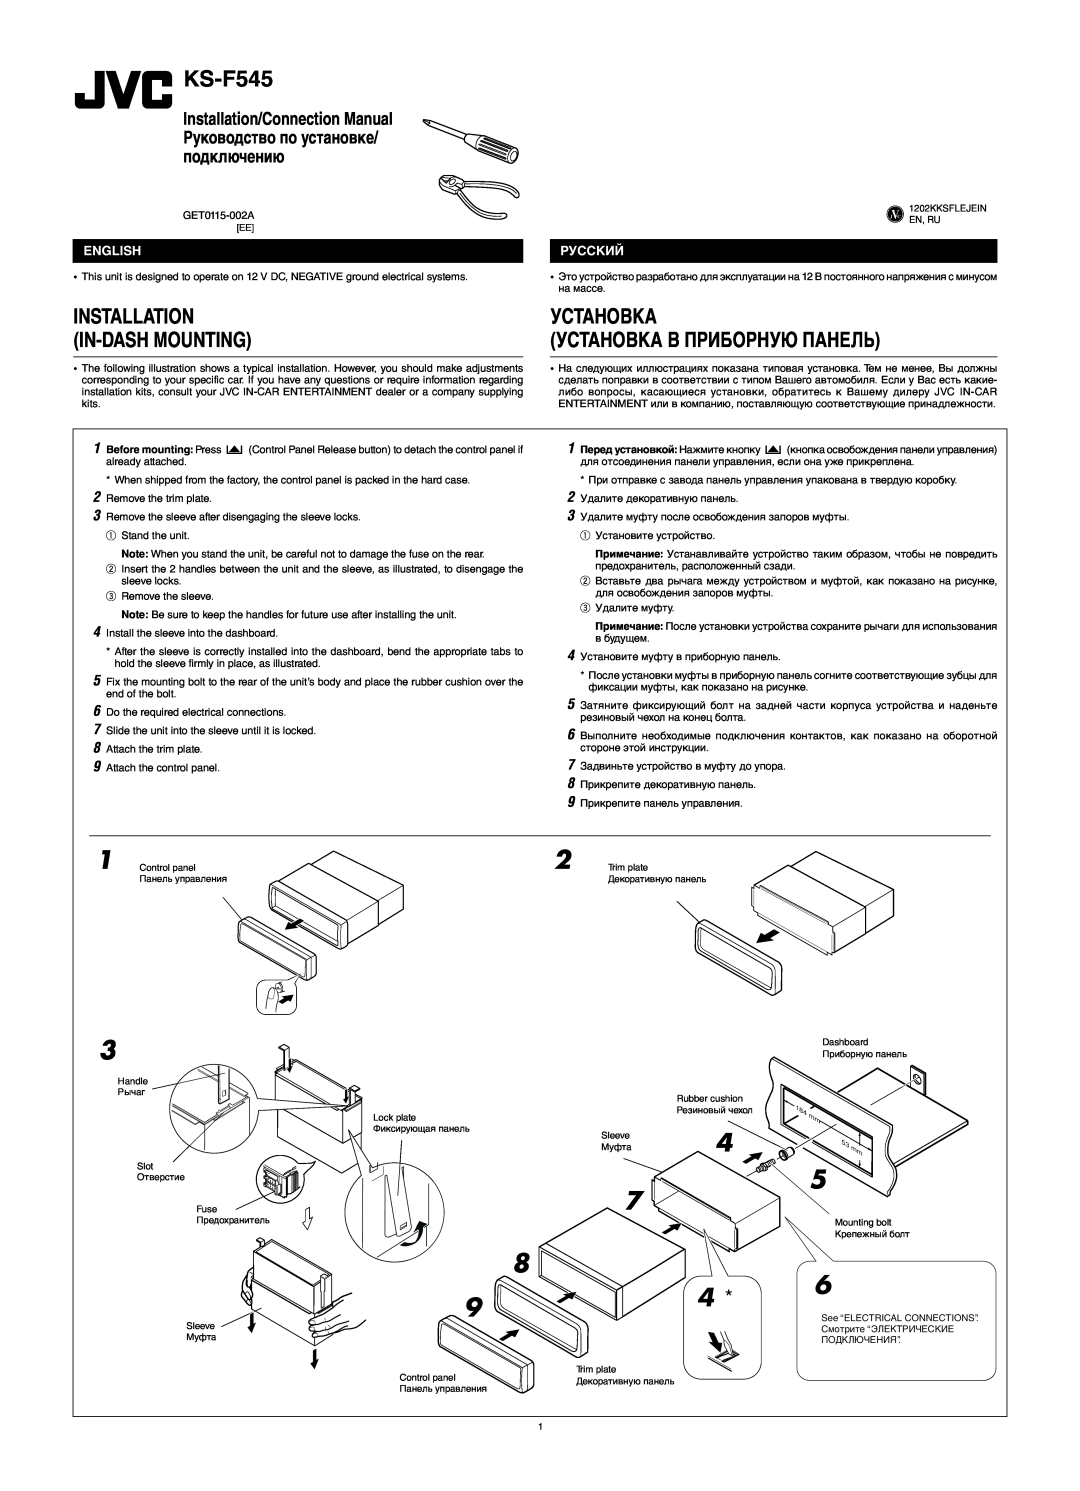 JVC KS-F545 manual Установка Установка В Приборную Панель 